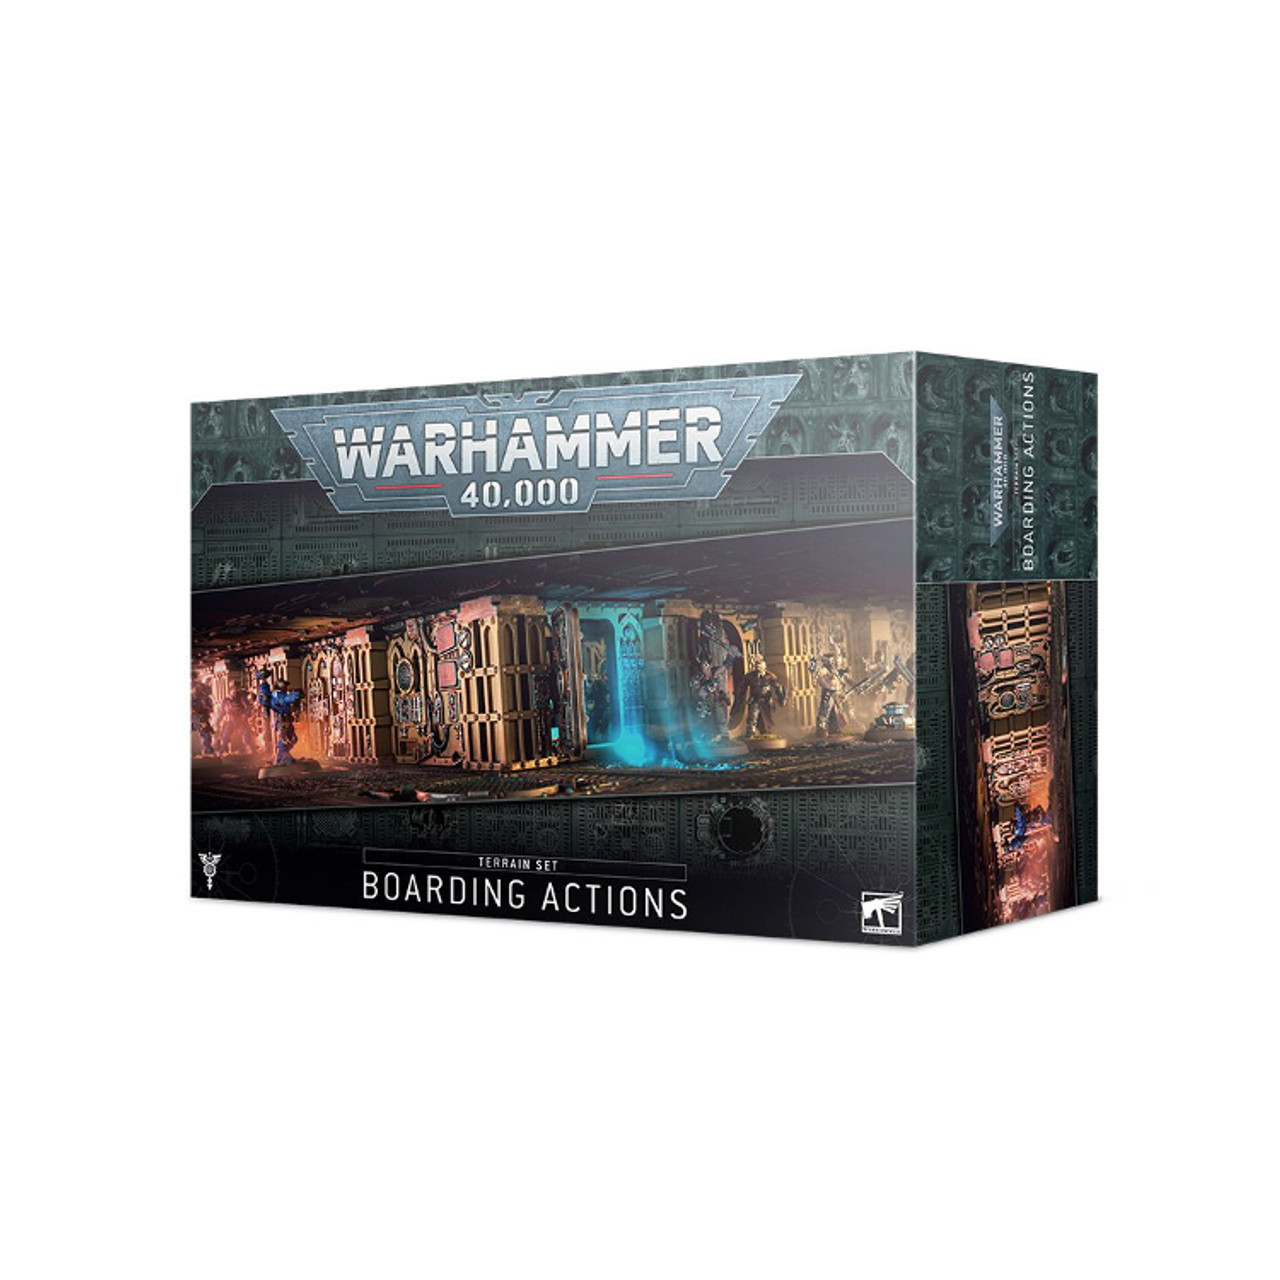 Warhammer 40k Terrain Set 